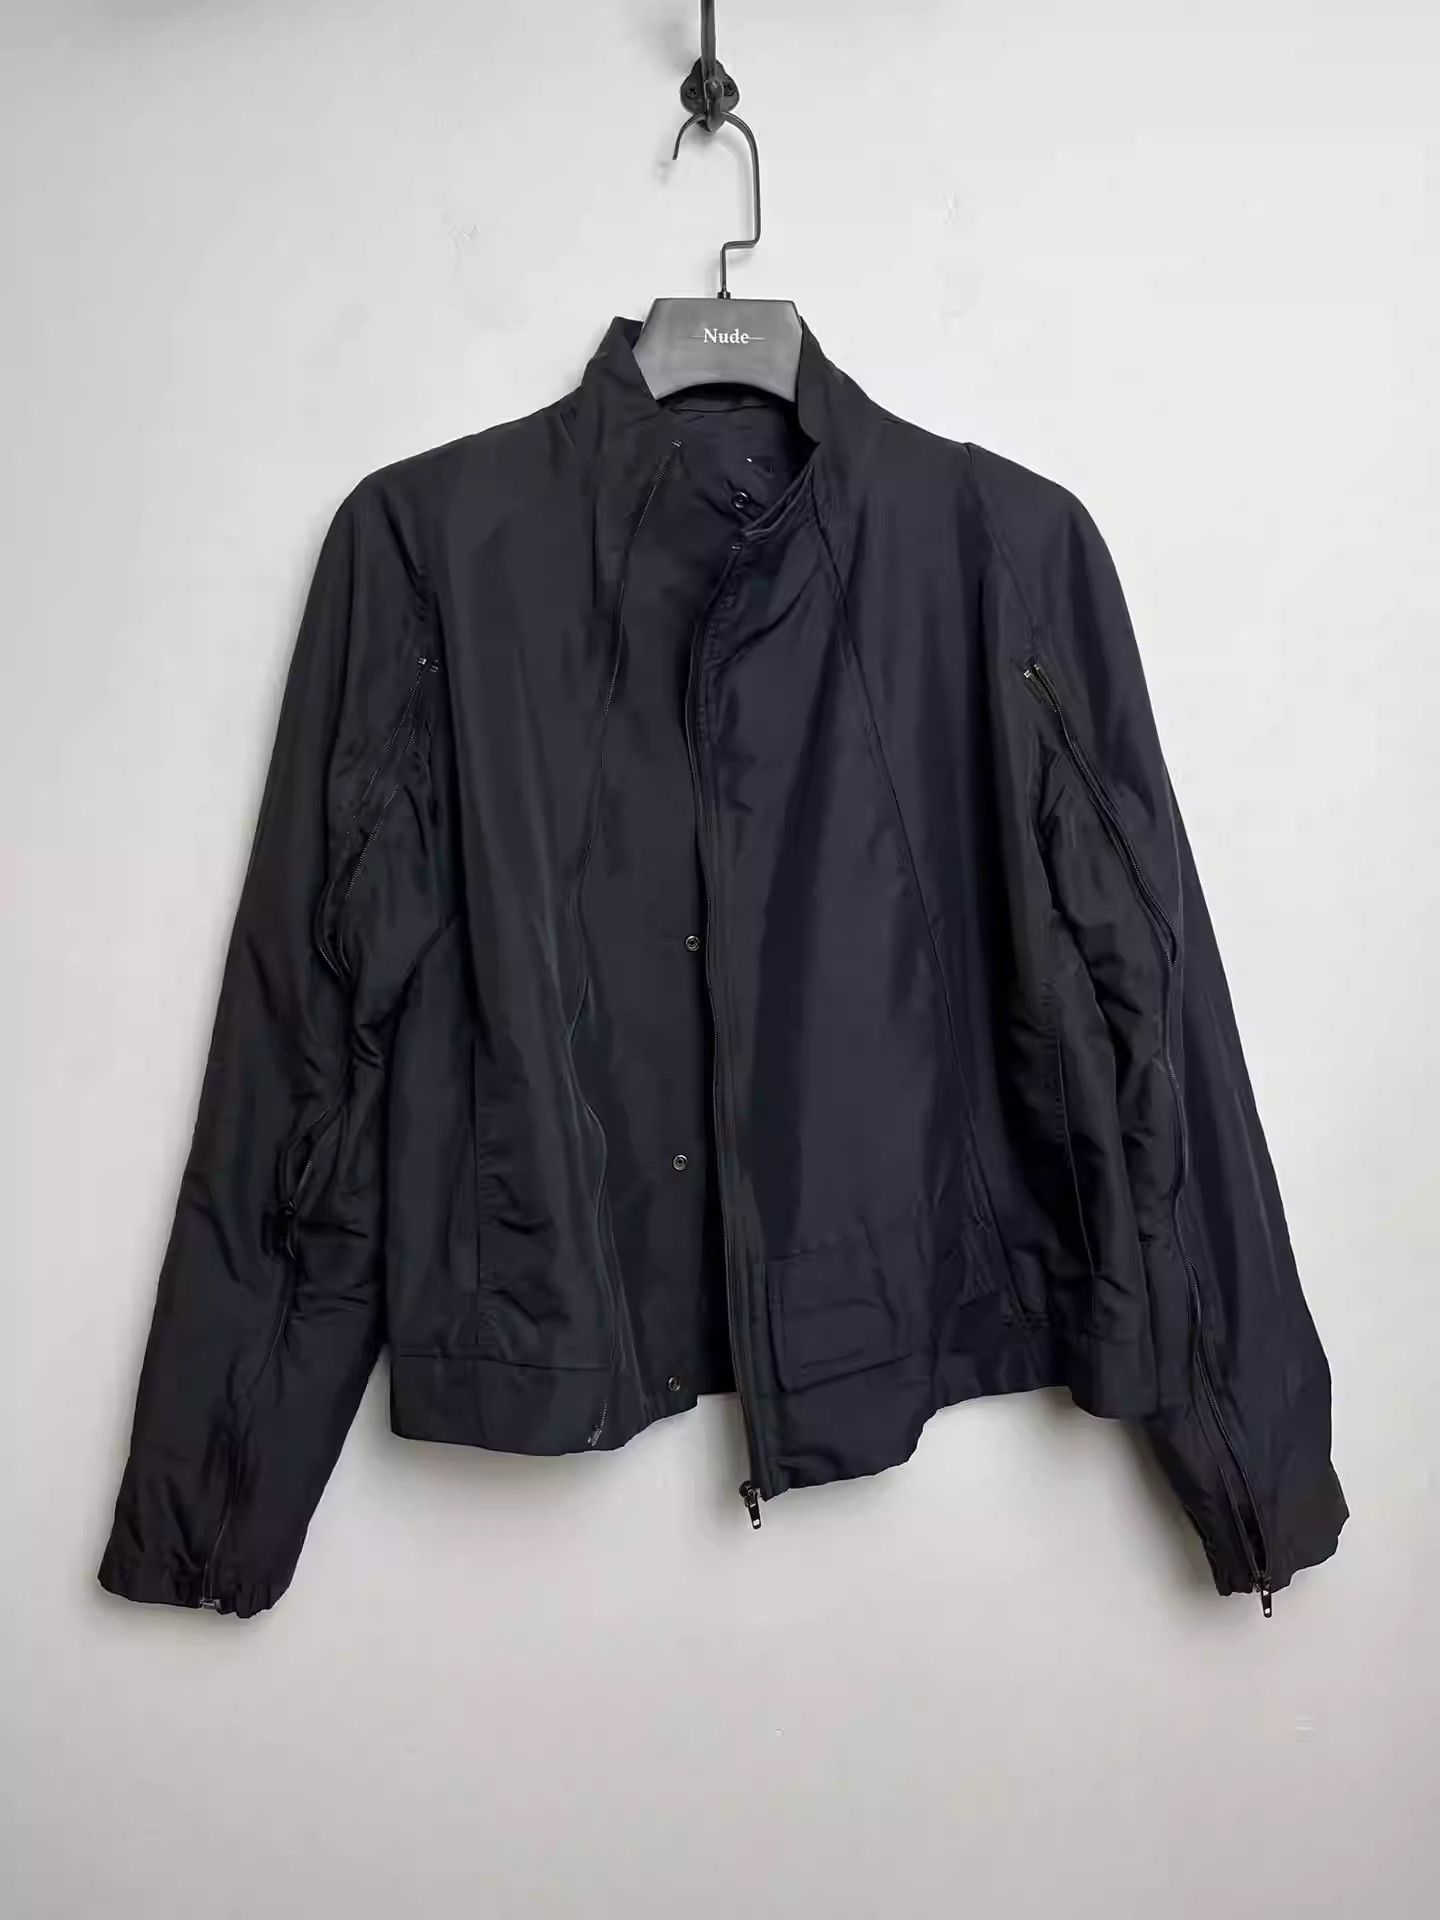 Raf Simons raf simons 08ss zipper jacket | Grailed